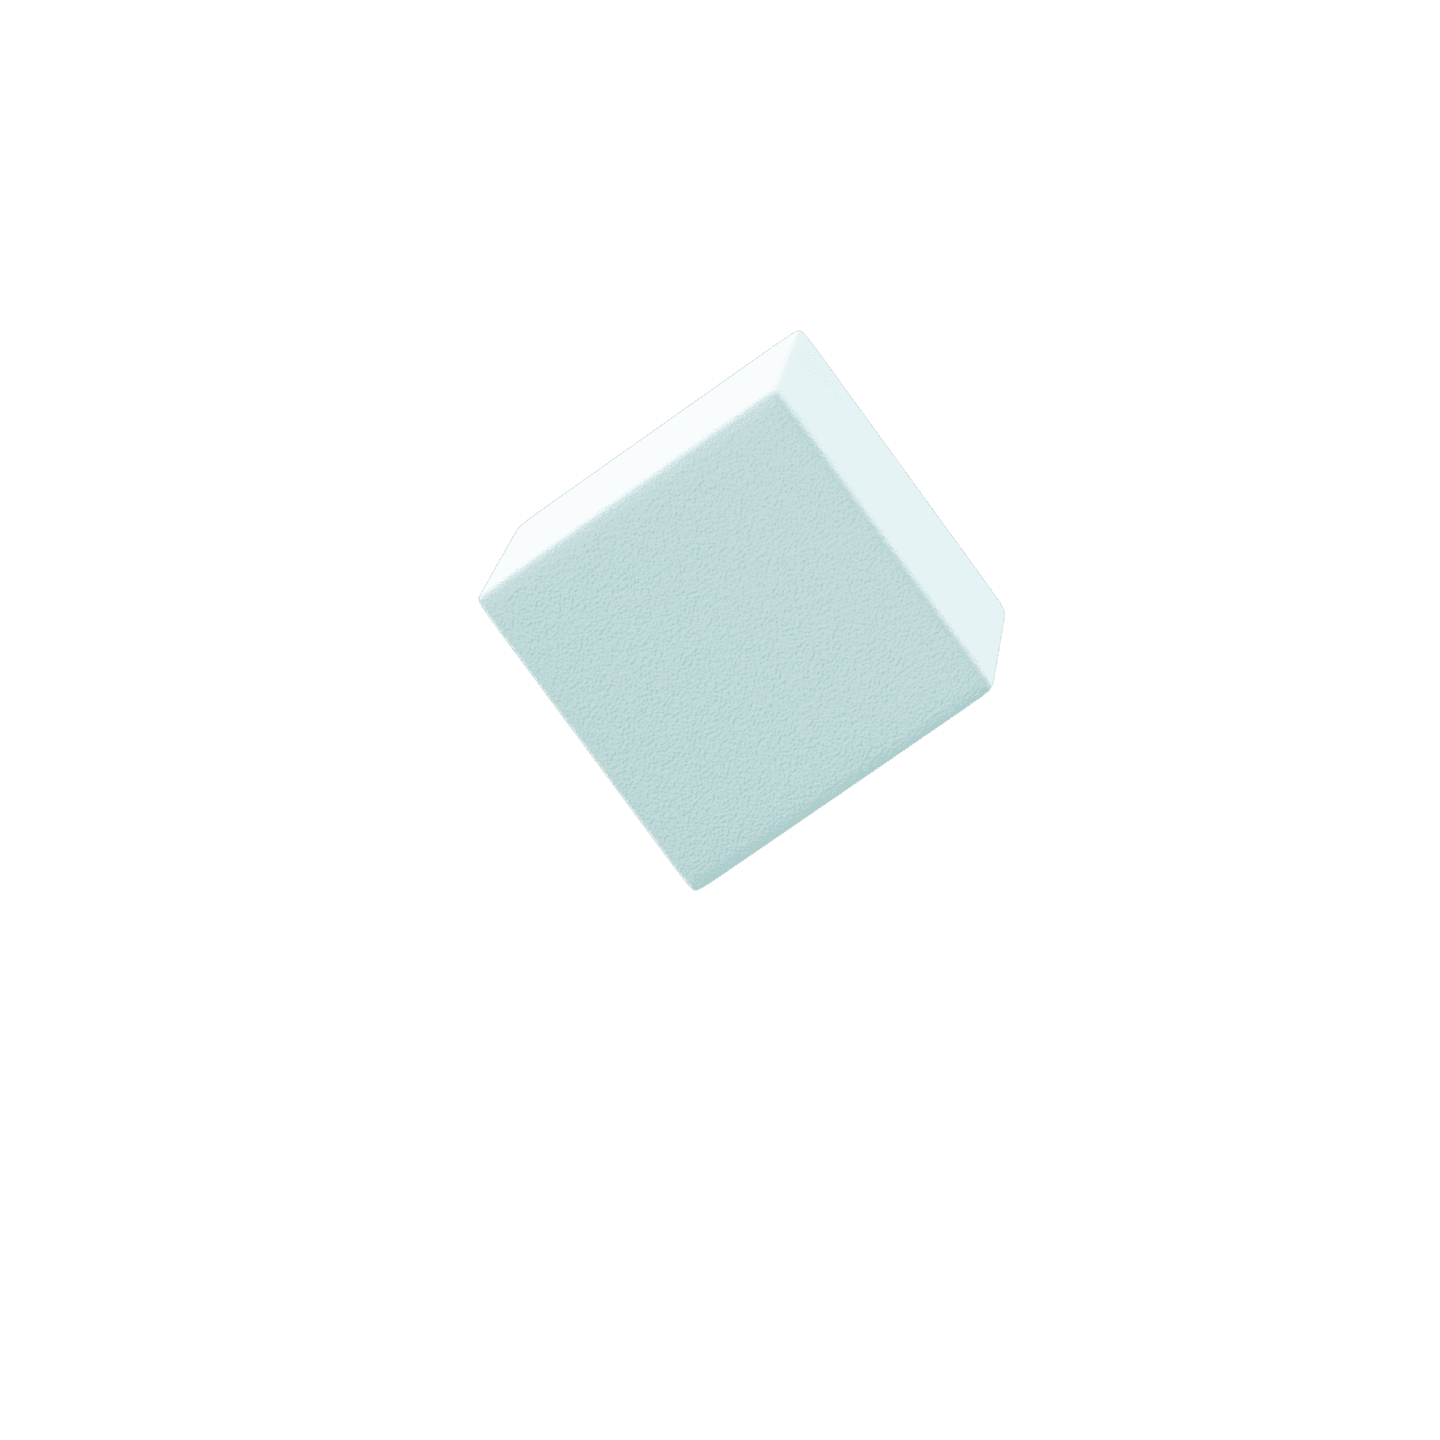 cube illustration